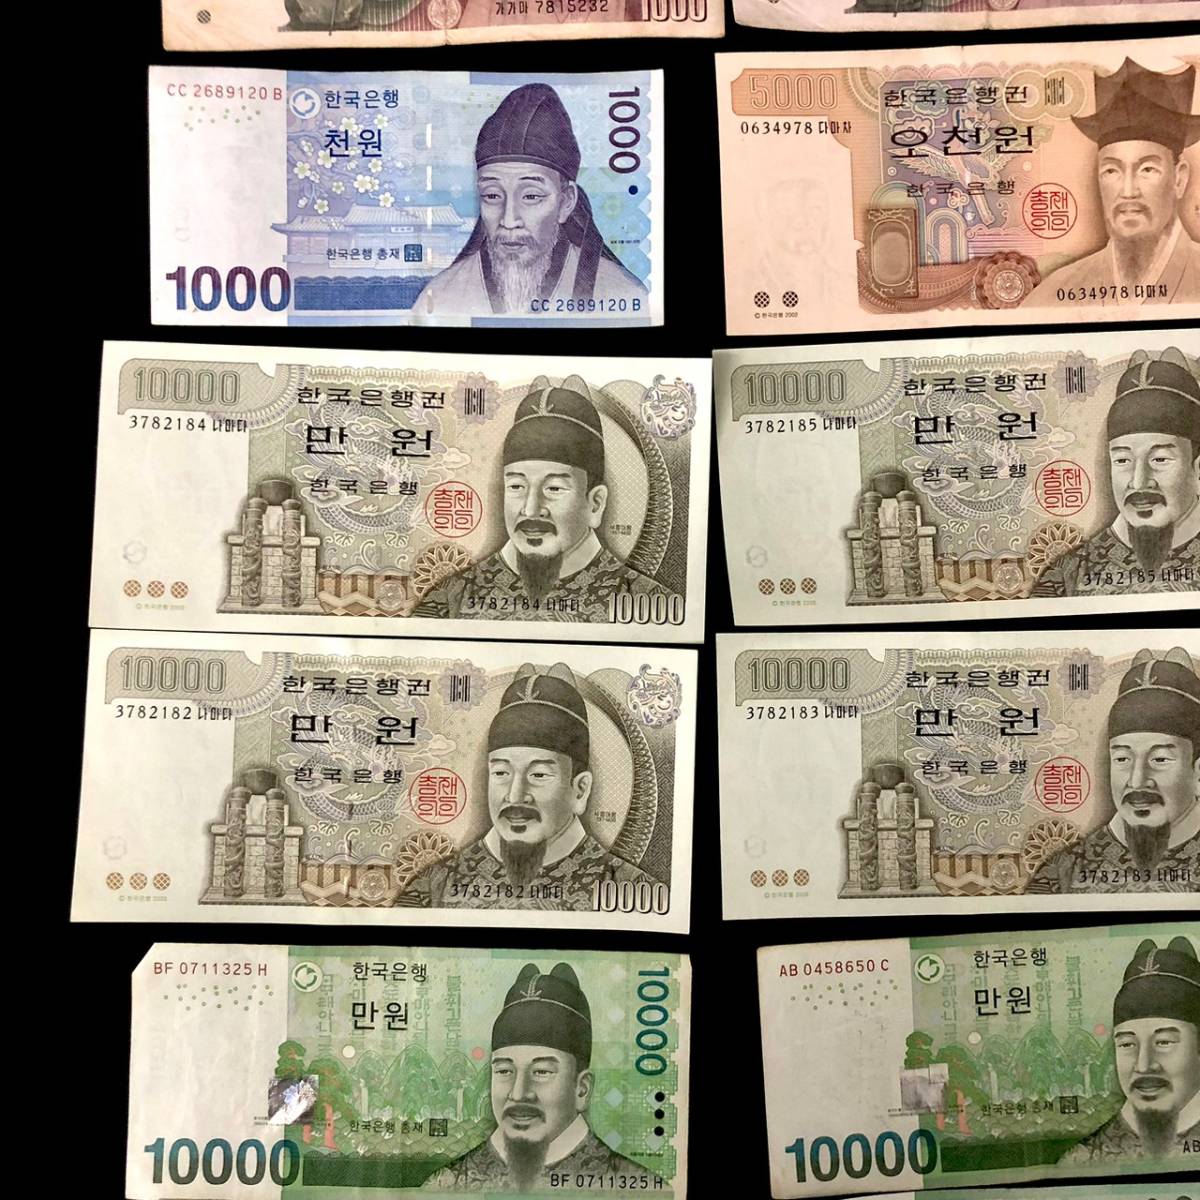 BAm130R 60 韓国ウォン 額面213,000ウォン 旧紙幣 古銭 外貨 コレクション WON アジア_画像5